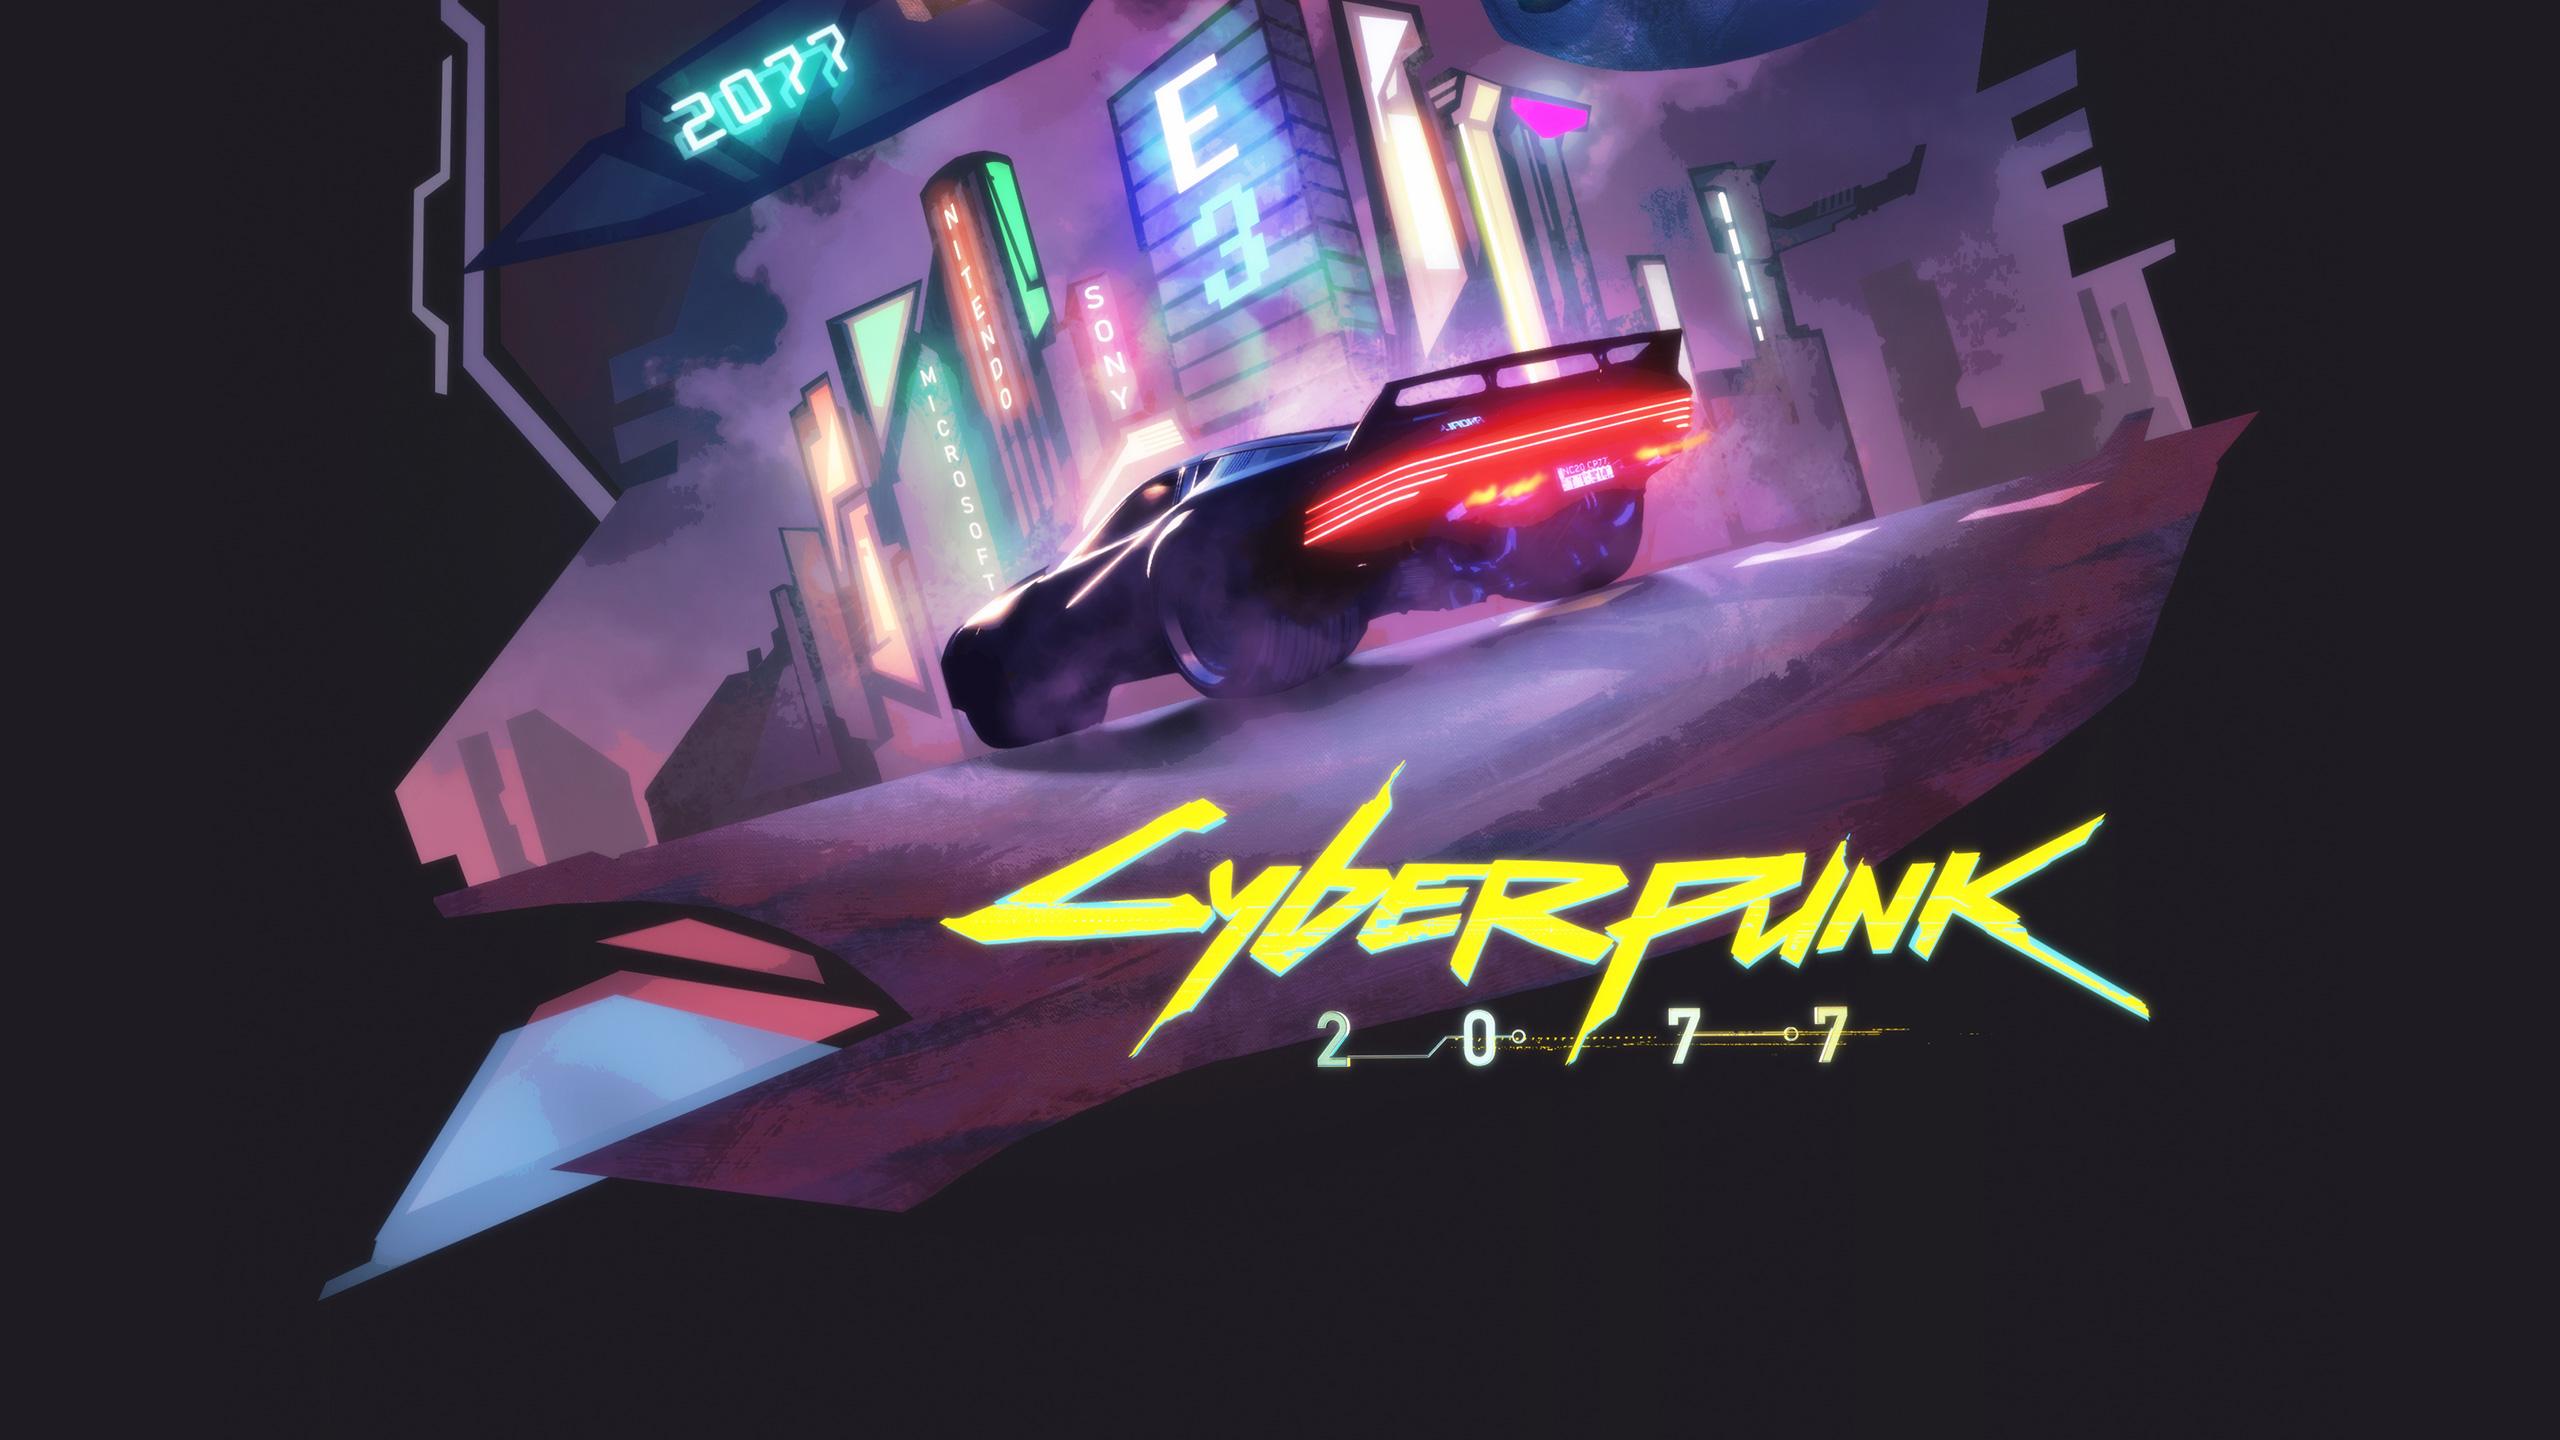 Cyberpunk 2077 picture free for desktop (2019)